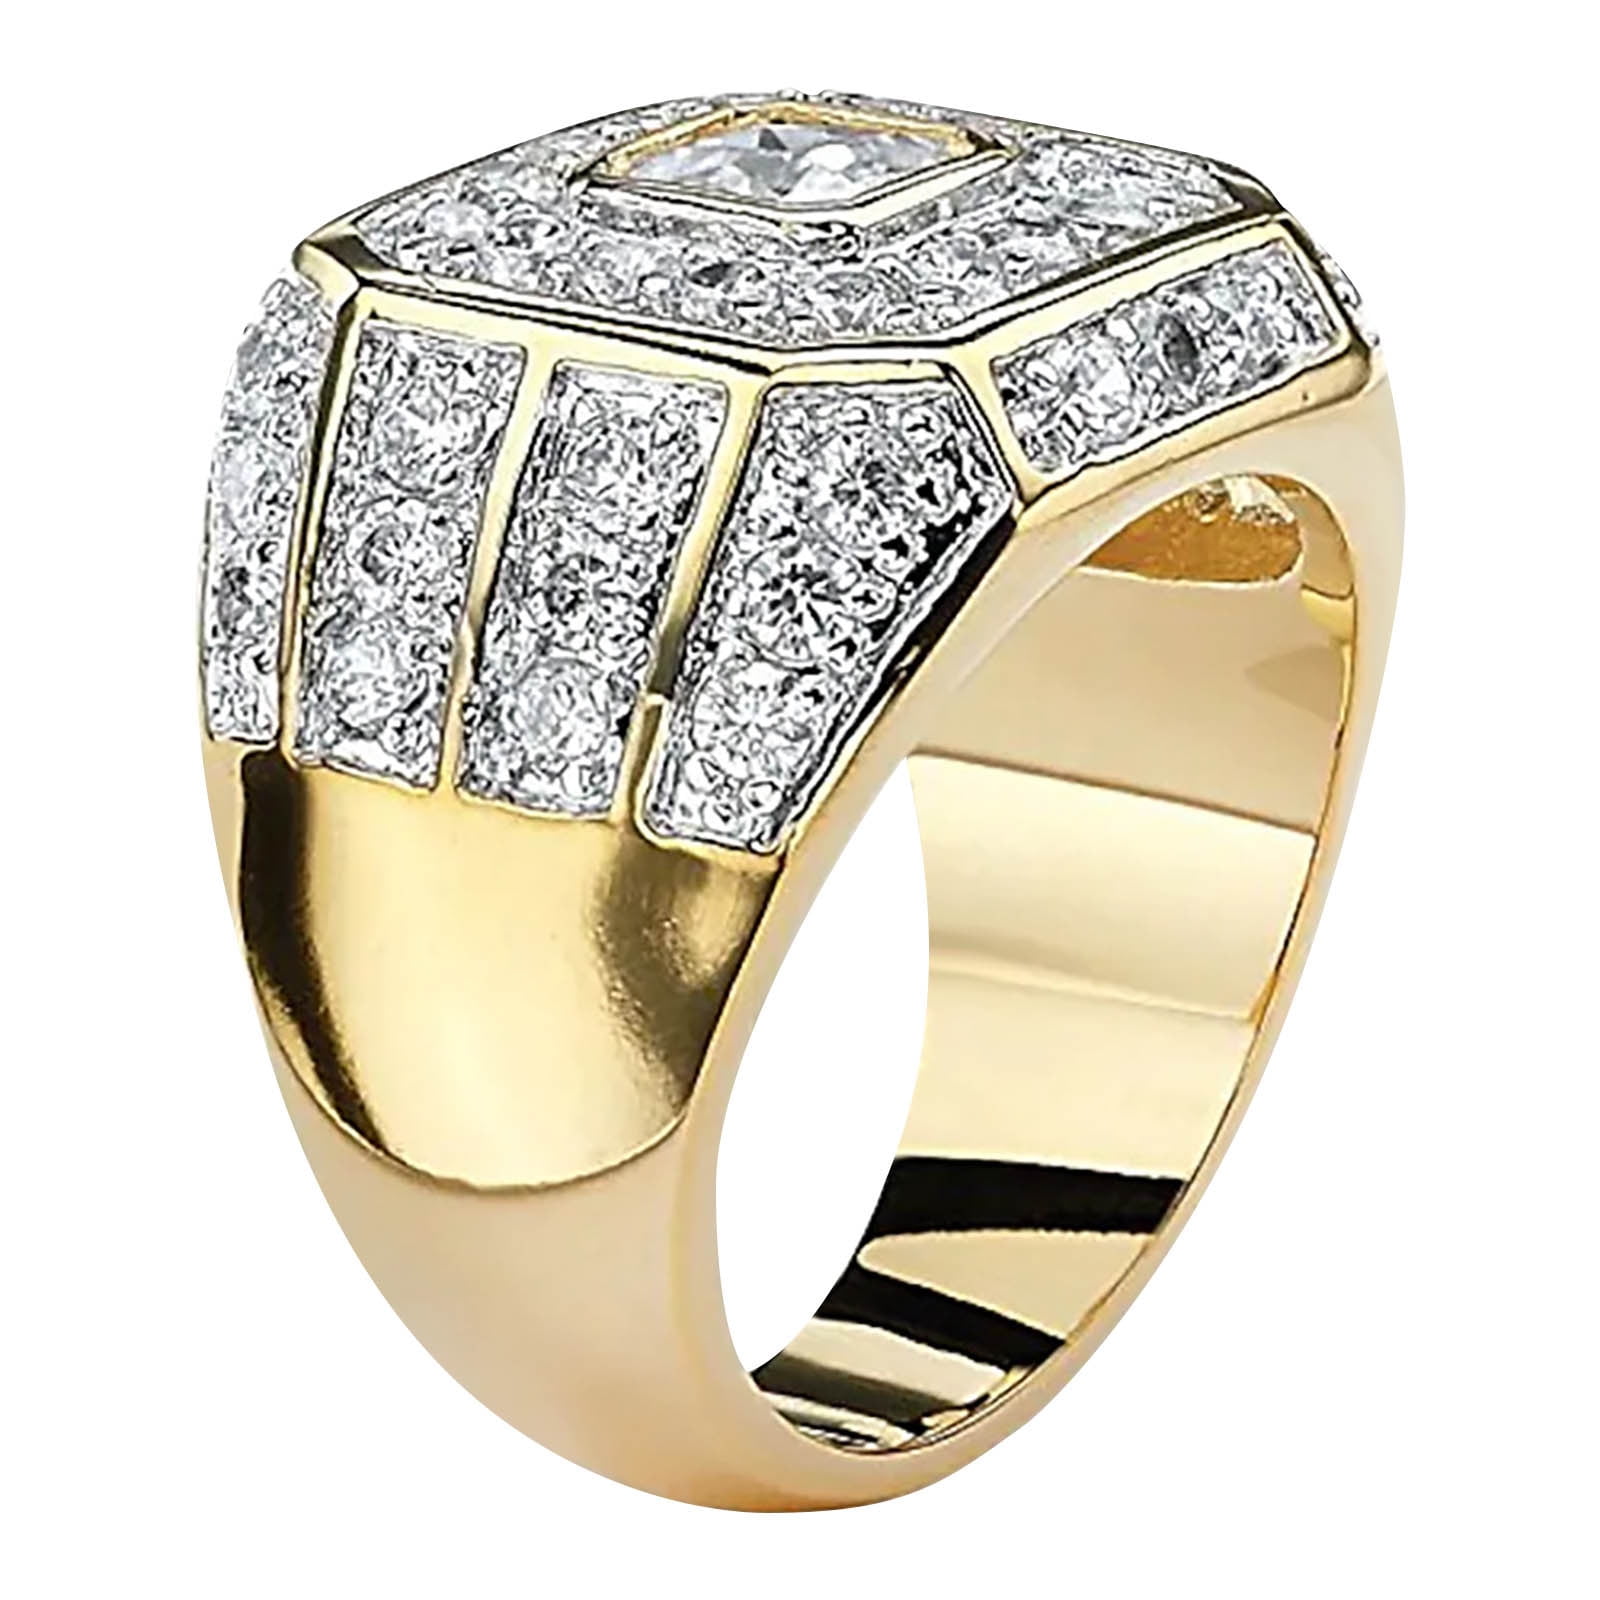 Custom Twotone Men's Wedding Ring w/ Emerald Cut Diamond | Exquisite Jewelry  for Every Occasion | FWCJ